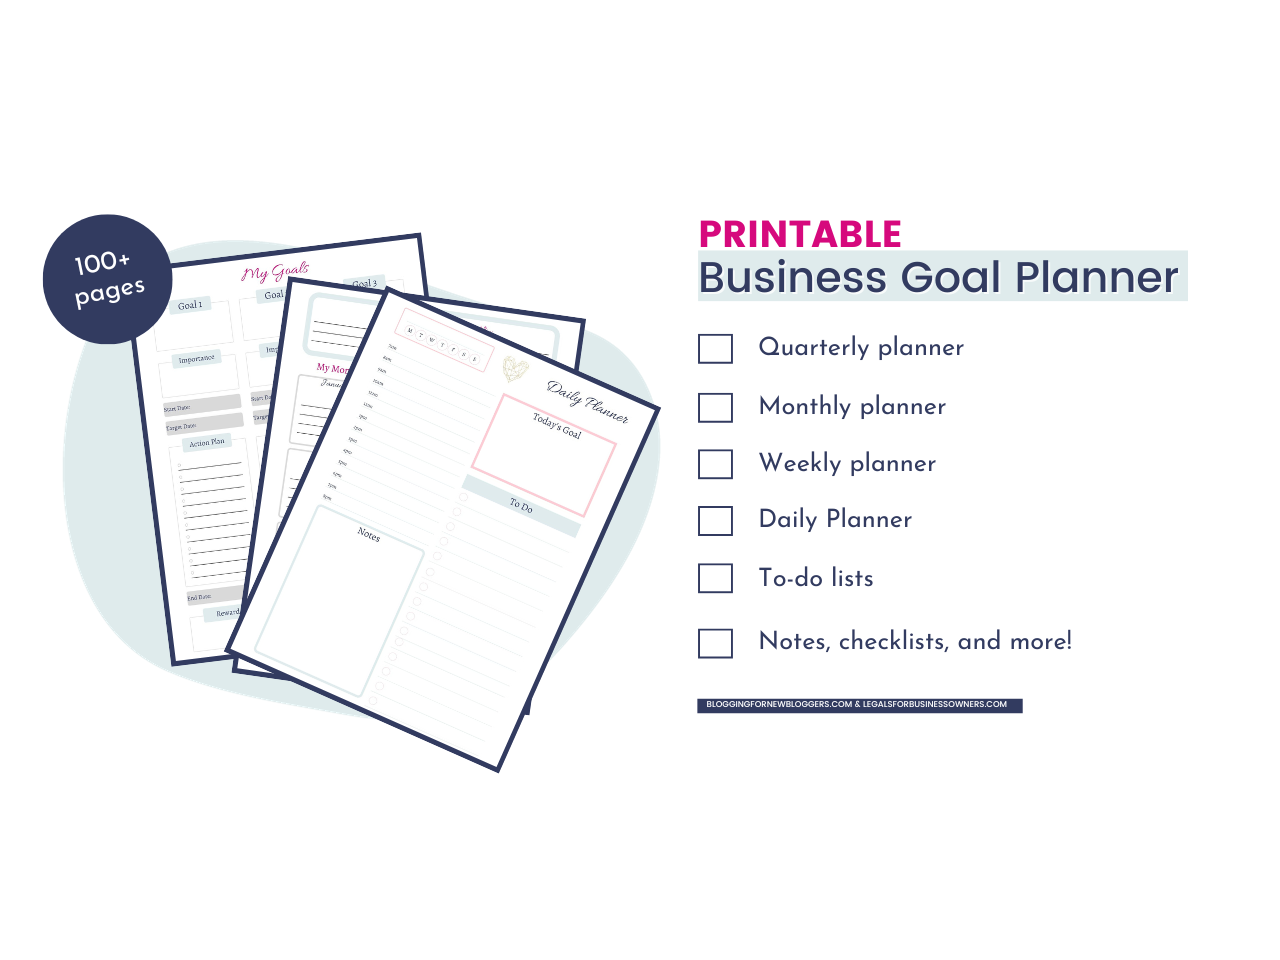 Printable Business Goal Planner Mockup